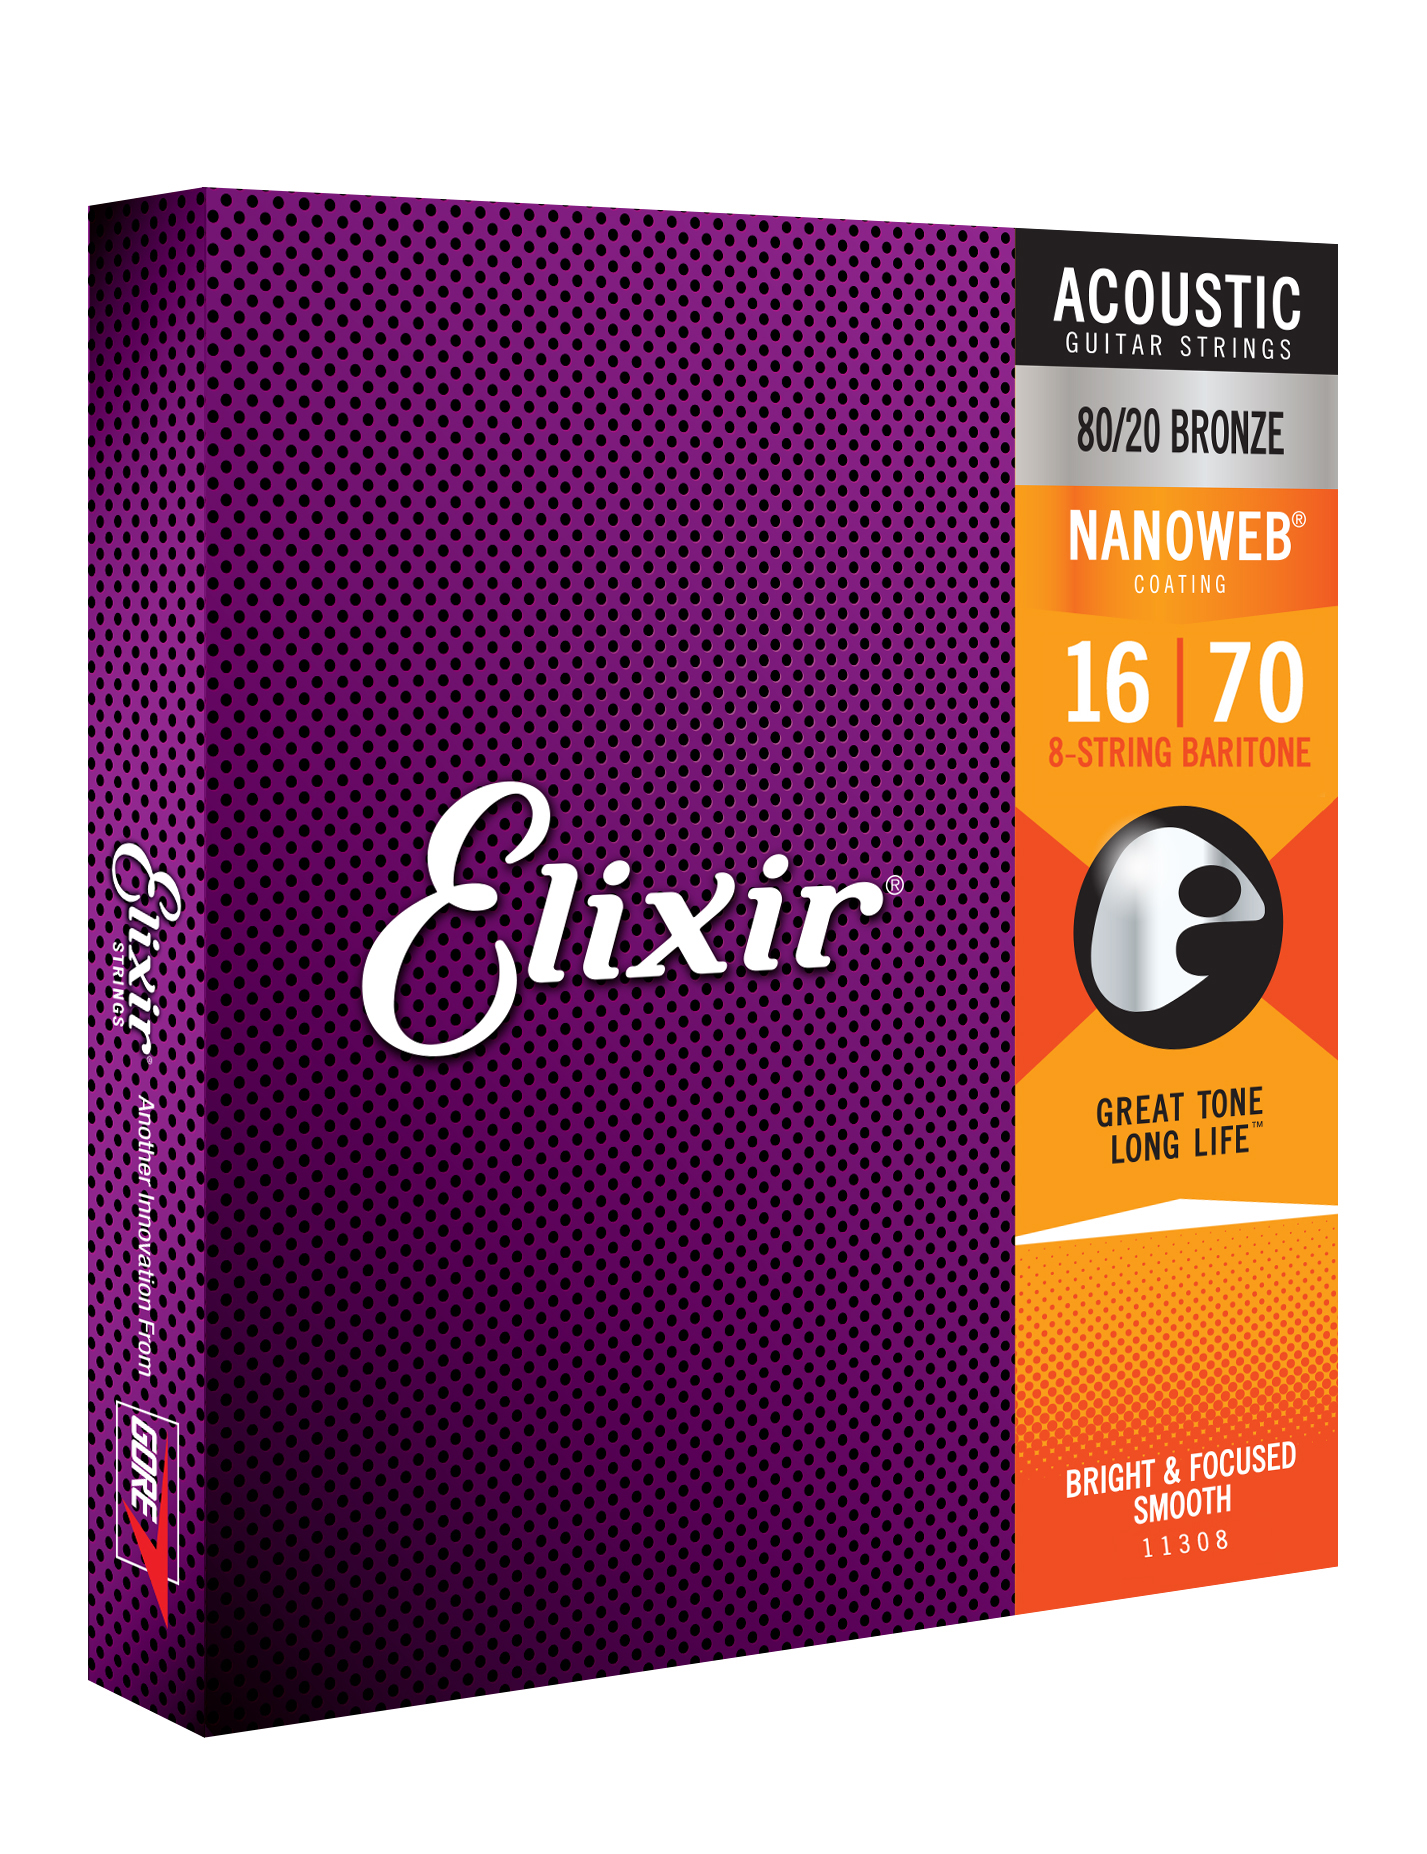 Elixir 11308 8-string Nanoweb 80/20 Bronze Acoustic Guitar 8c Baritone 16-70 - Acoustic guitar strings - Variation 1